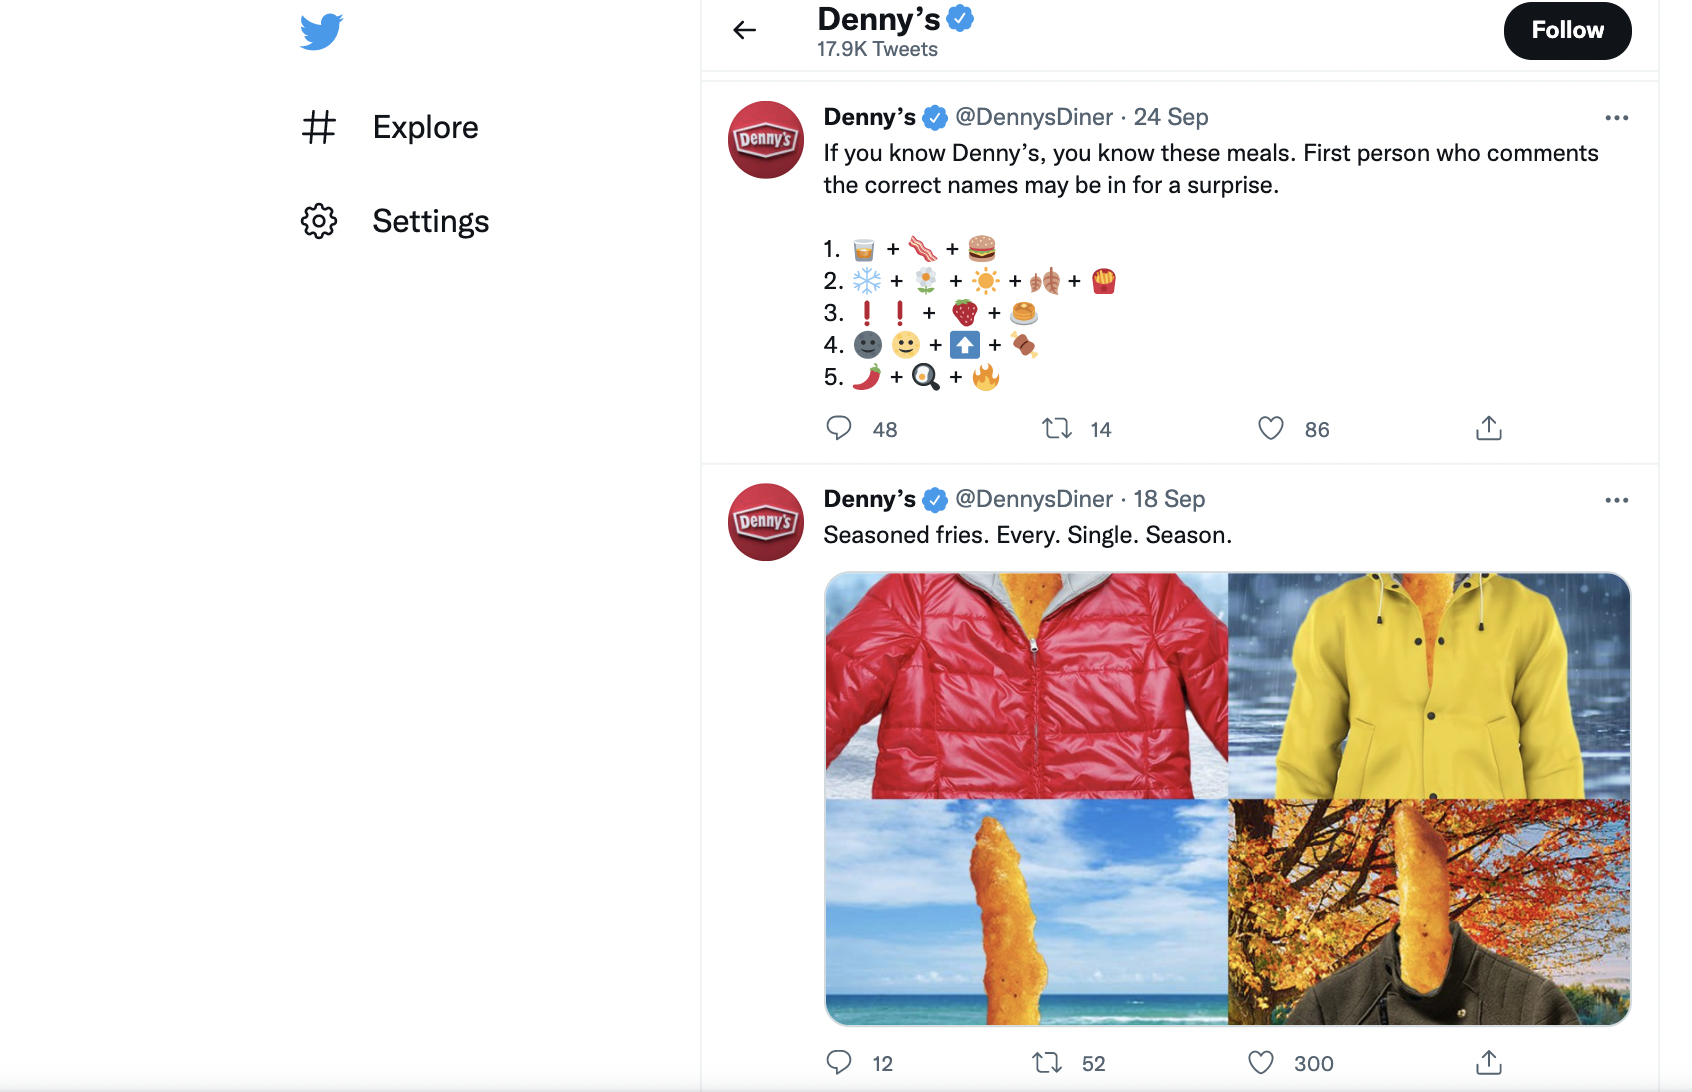 restaurant advertisement example - dennys twitter